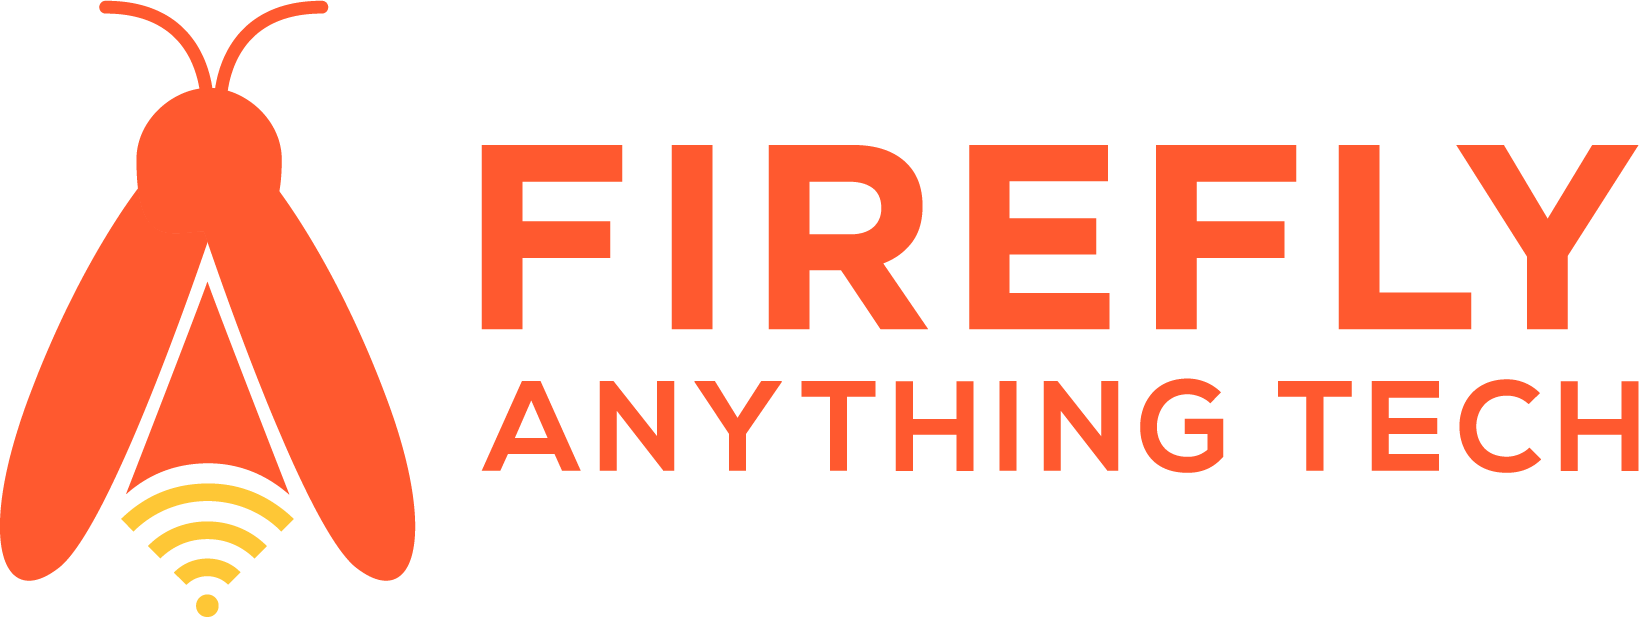 Firefly Anything Tech Logo